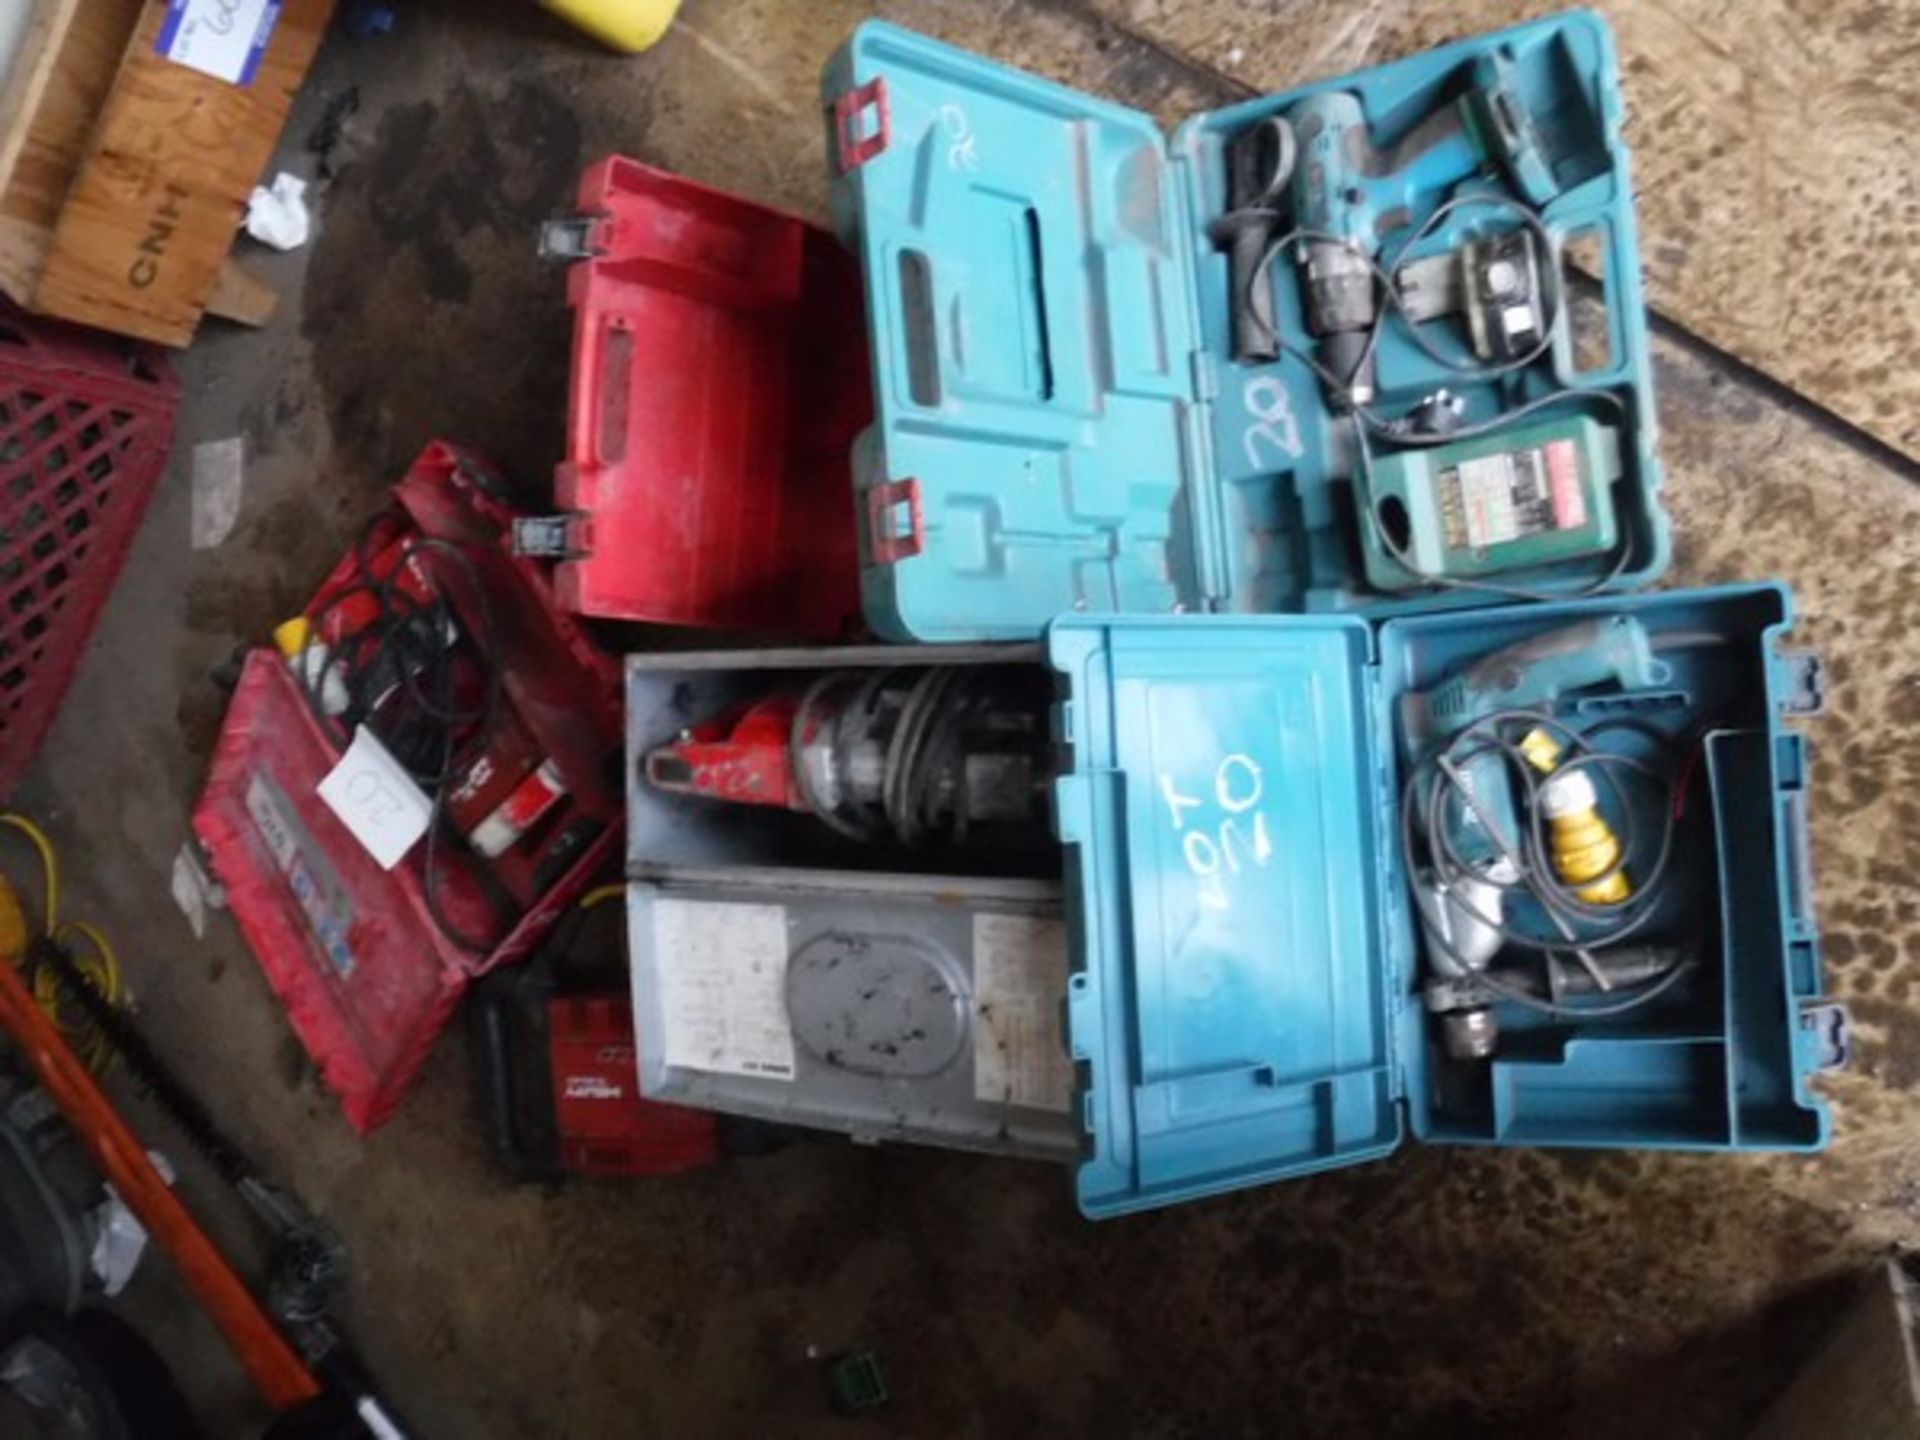 SELECTION OF POWER TOOLS - 1 KANGO BOXED, 2 MAKITAS BOXED, 2 HILTIS BOXED & 1 HILTI NOT BOXED